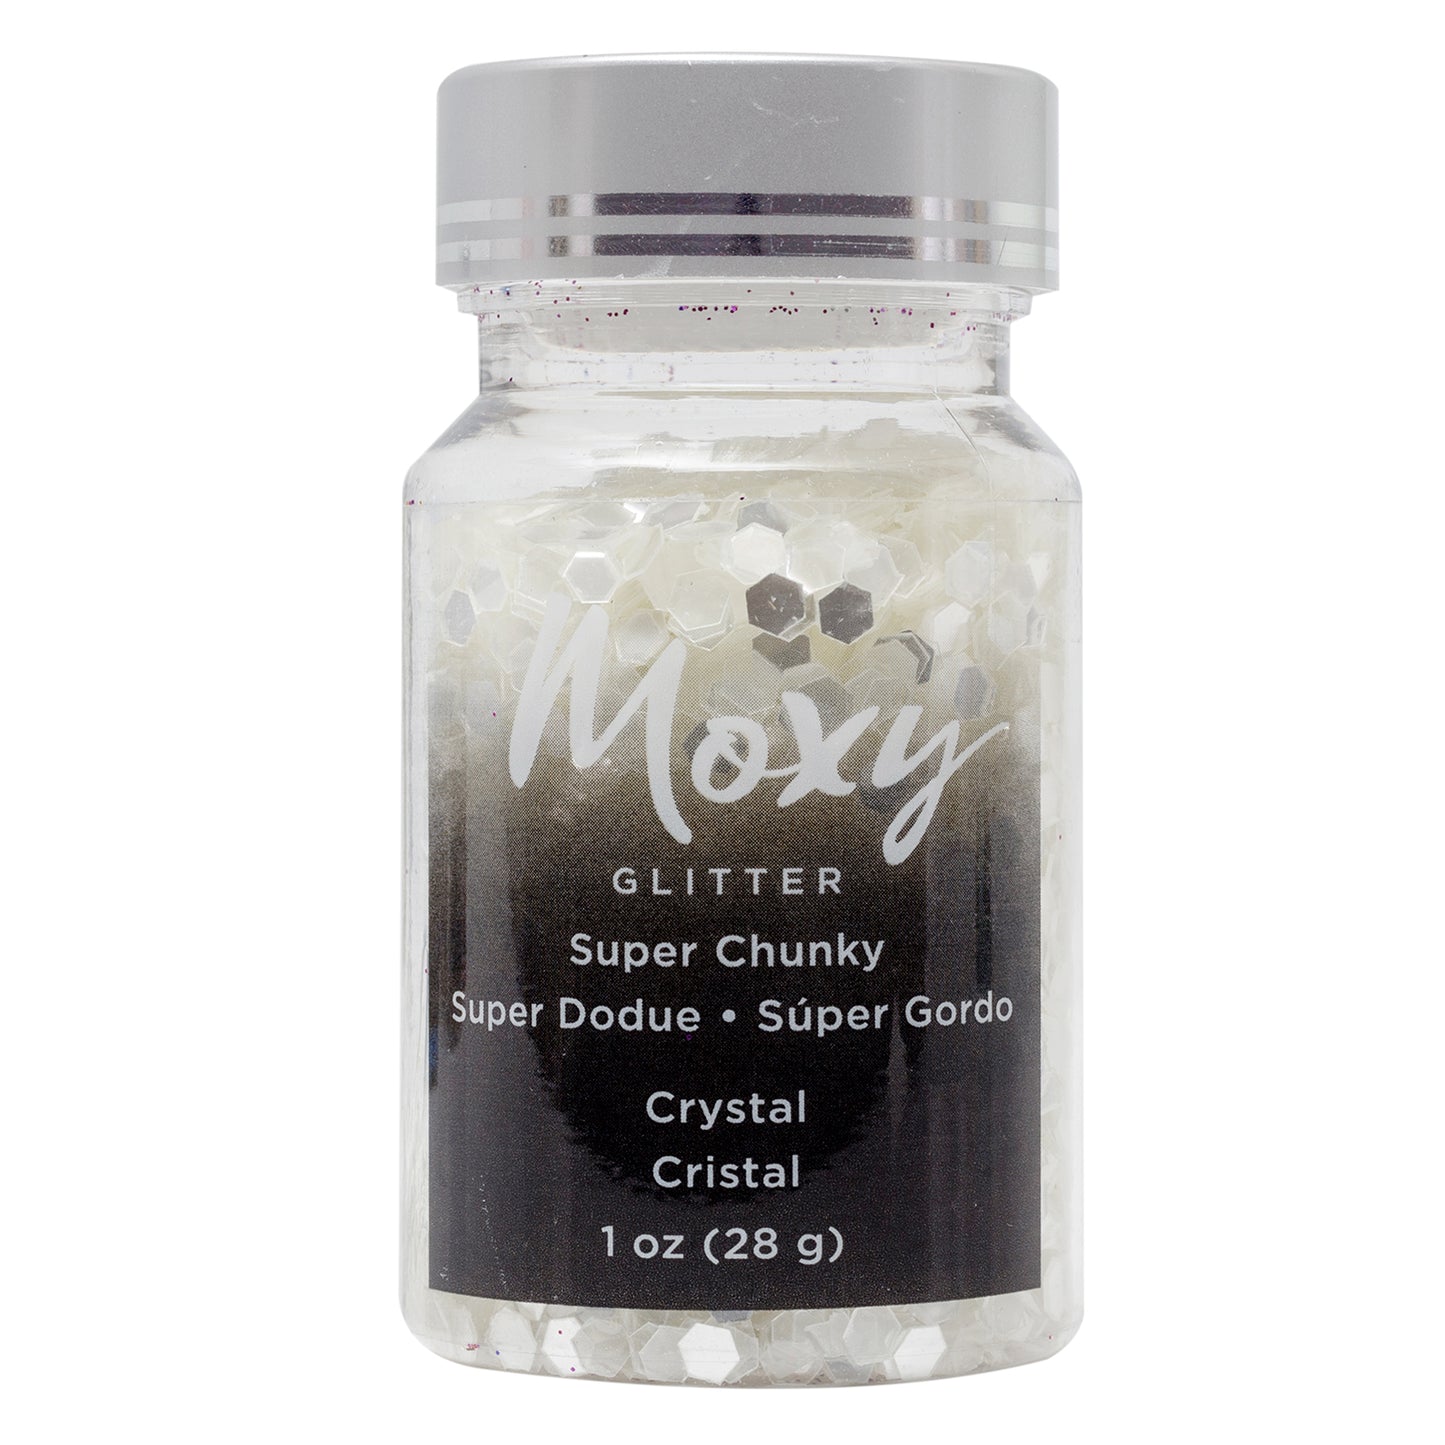 Moxy Glitter Super Chunky - Crystal 1 oz+ Bottle - CraftCutterSupply.com